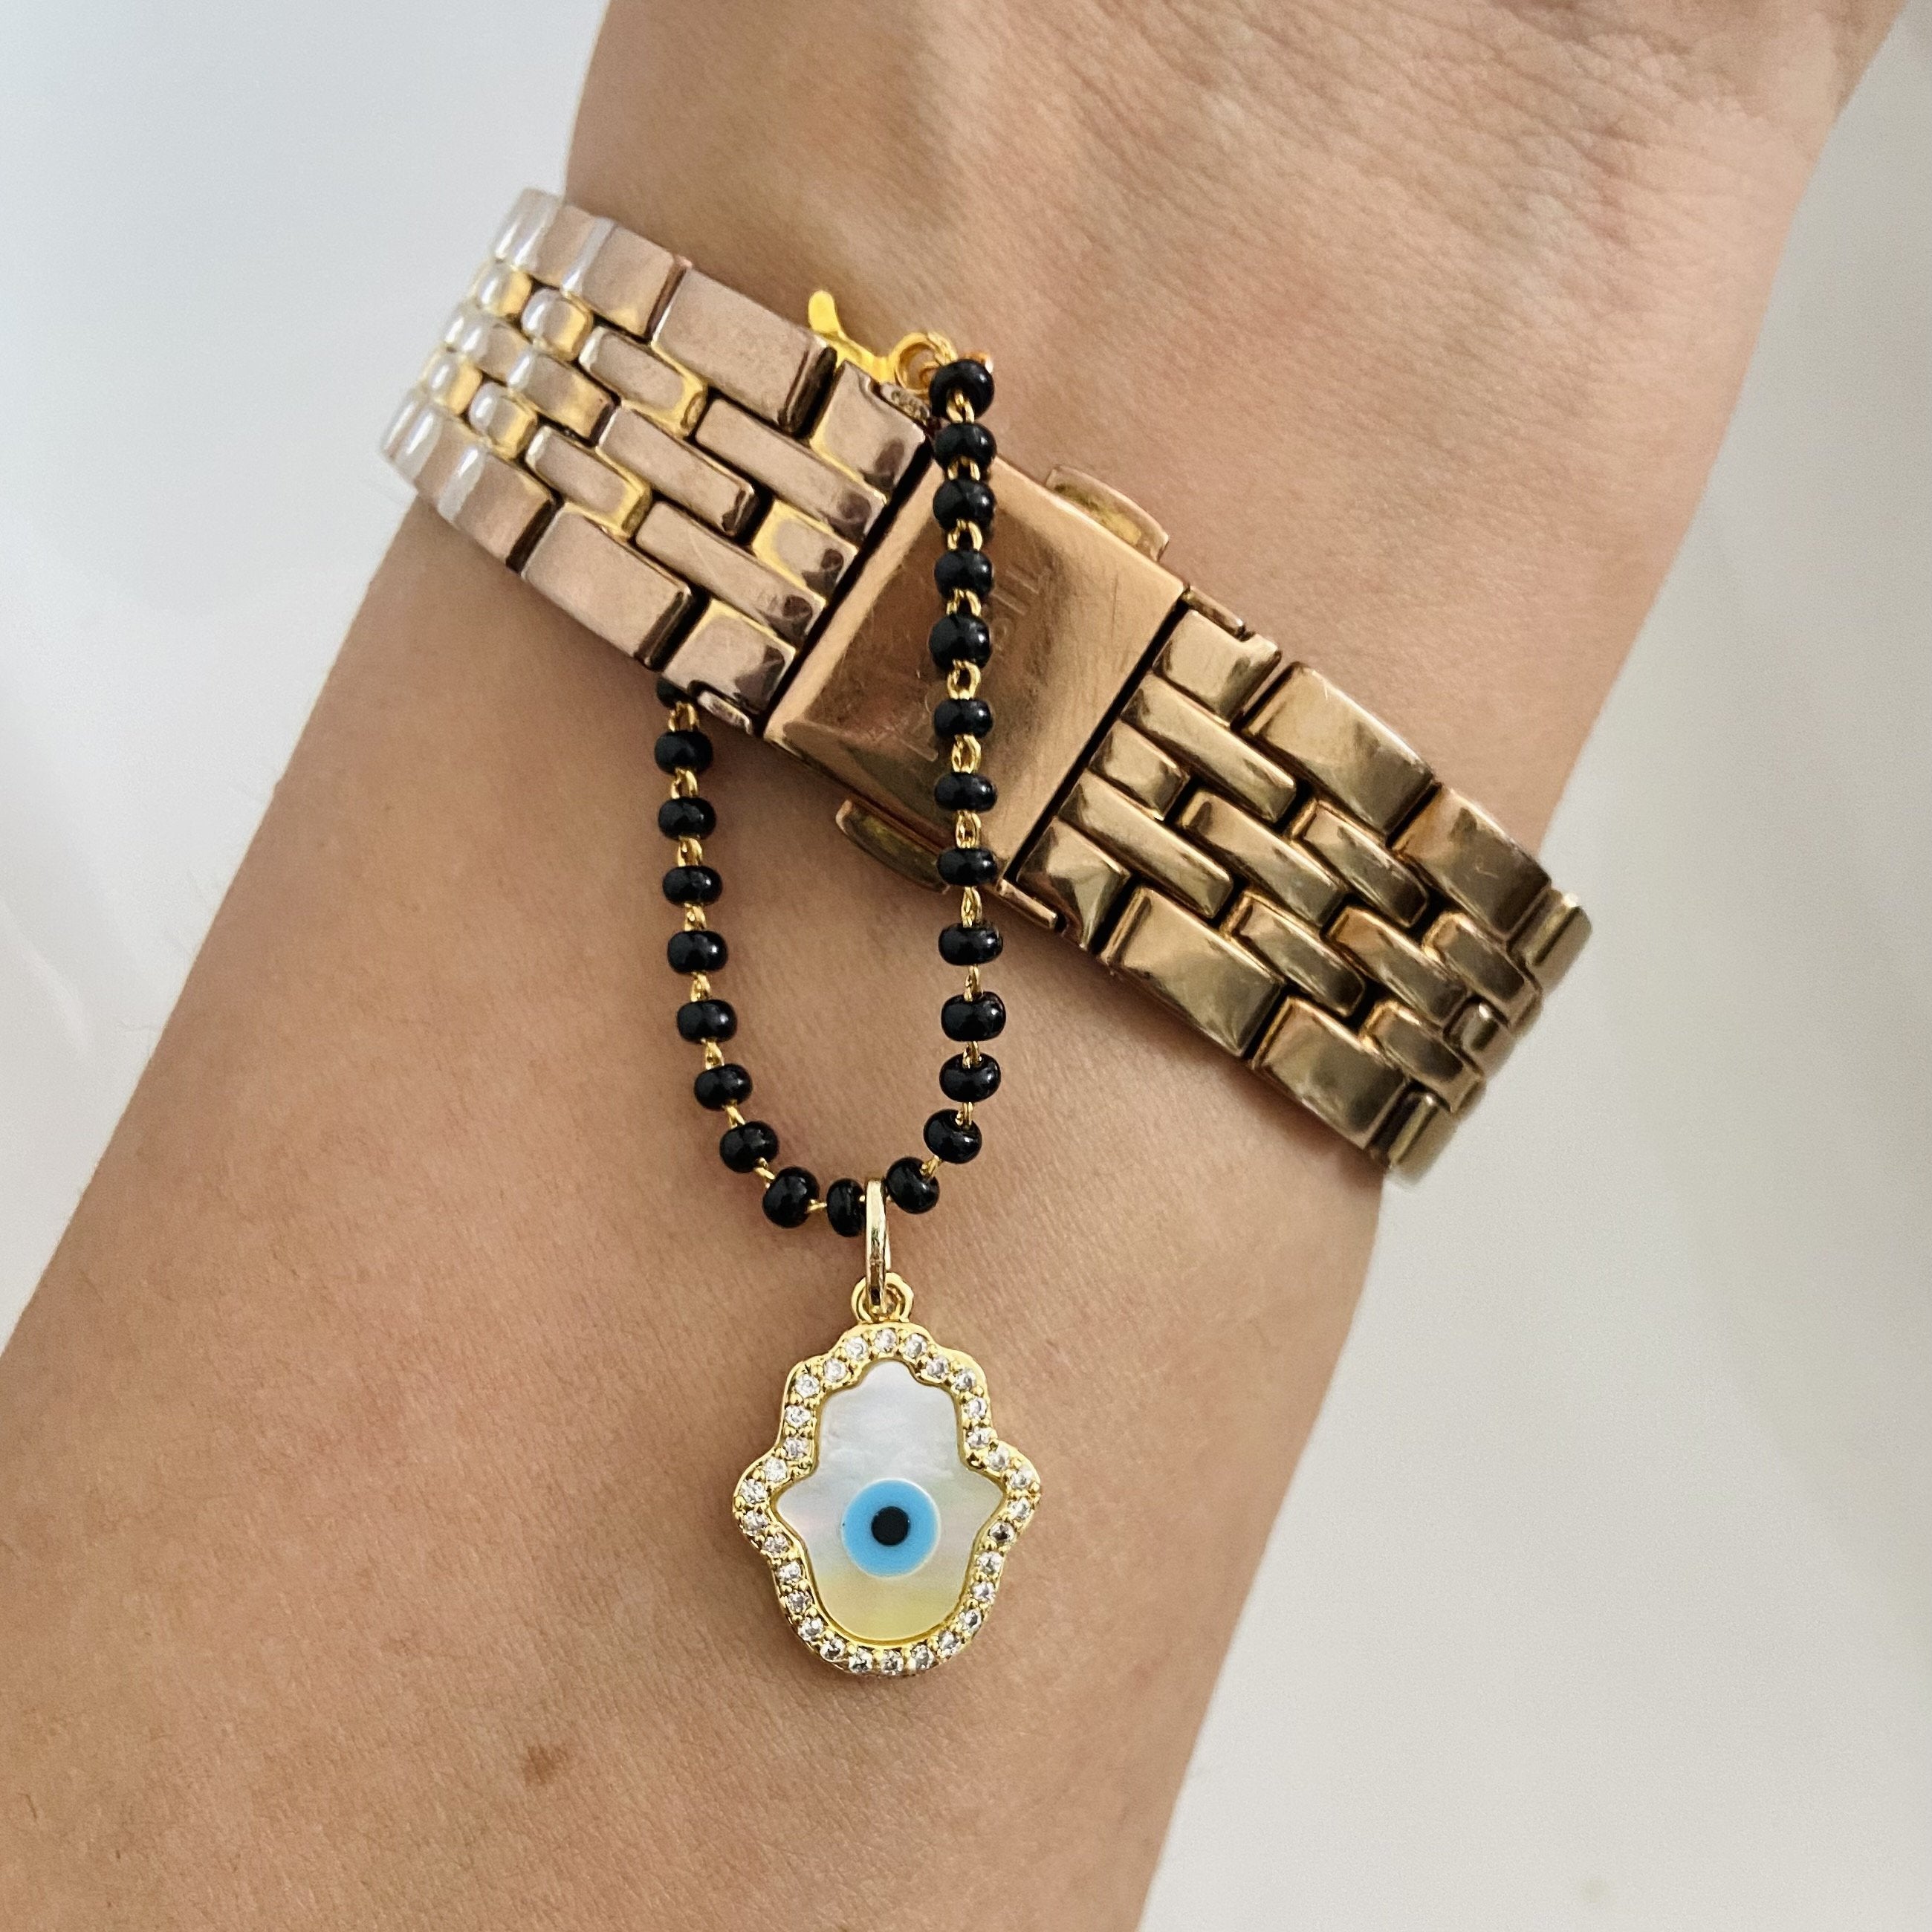 Hamsa Evileye Mangalsutra Bracelets - Upakarna Jewelry